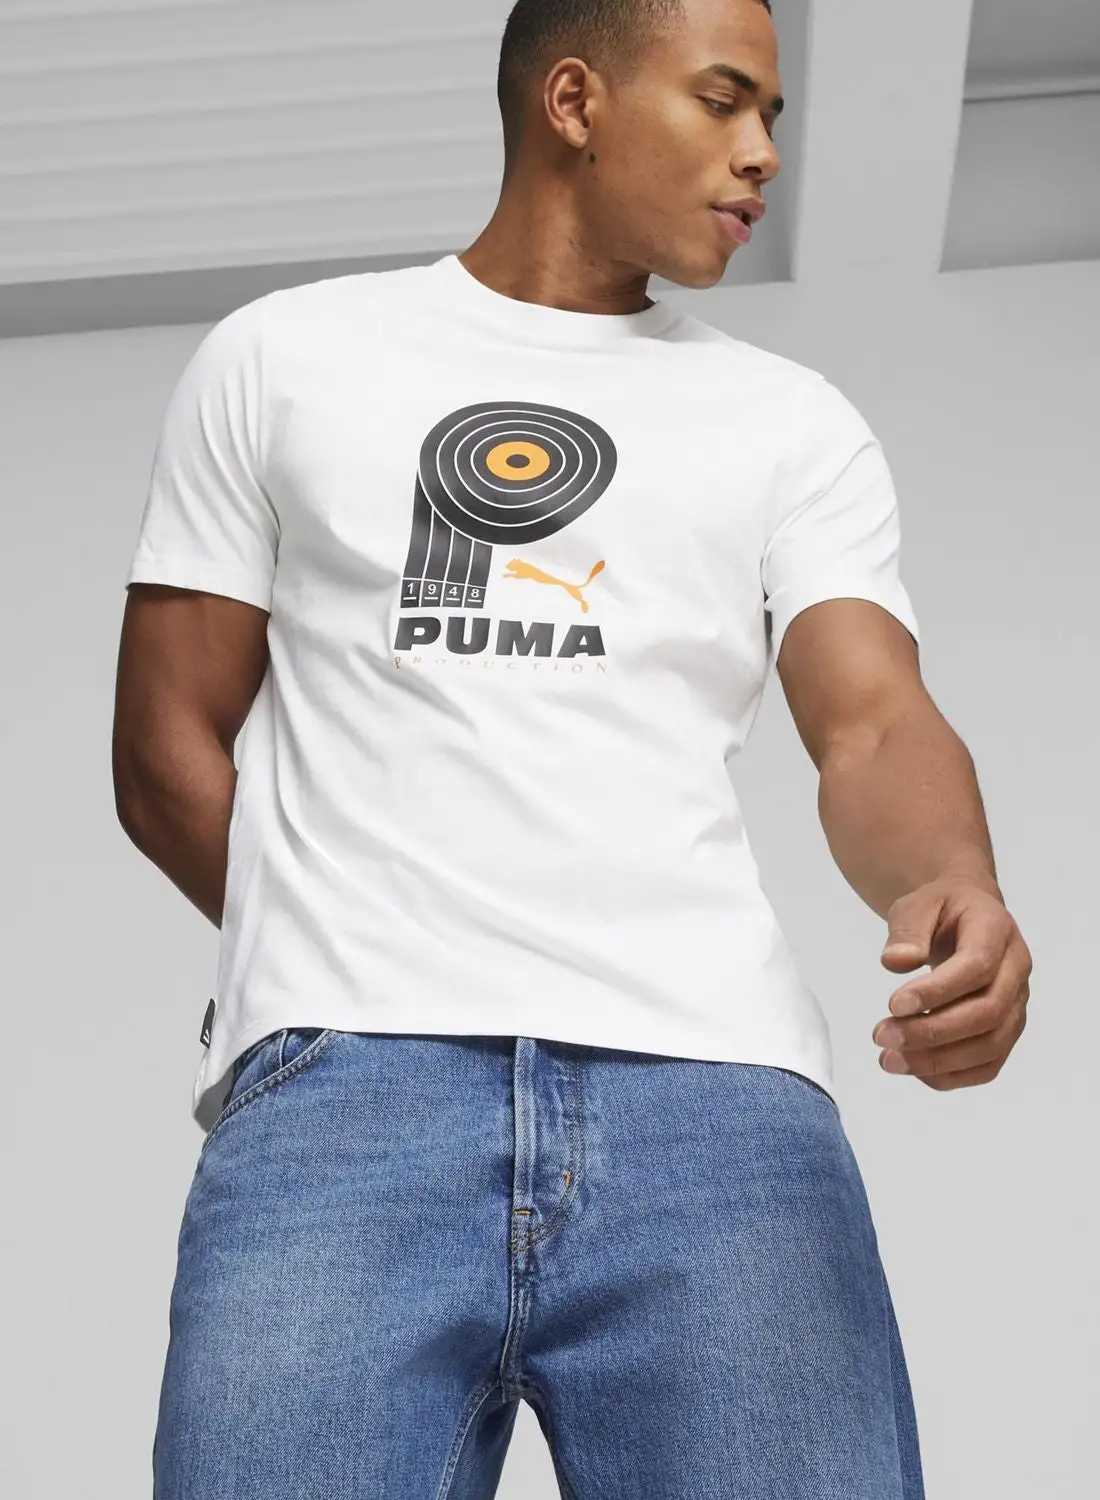 PUMA Production Graphics T-Shirt